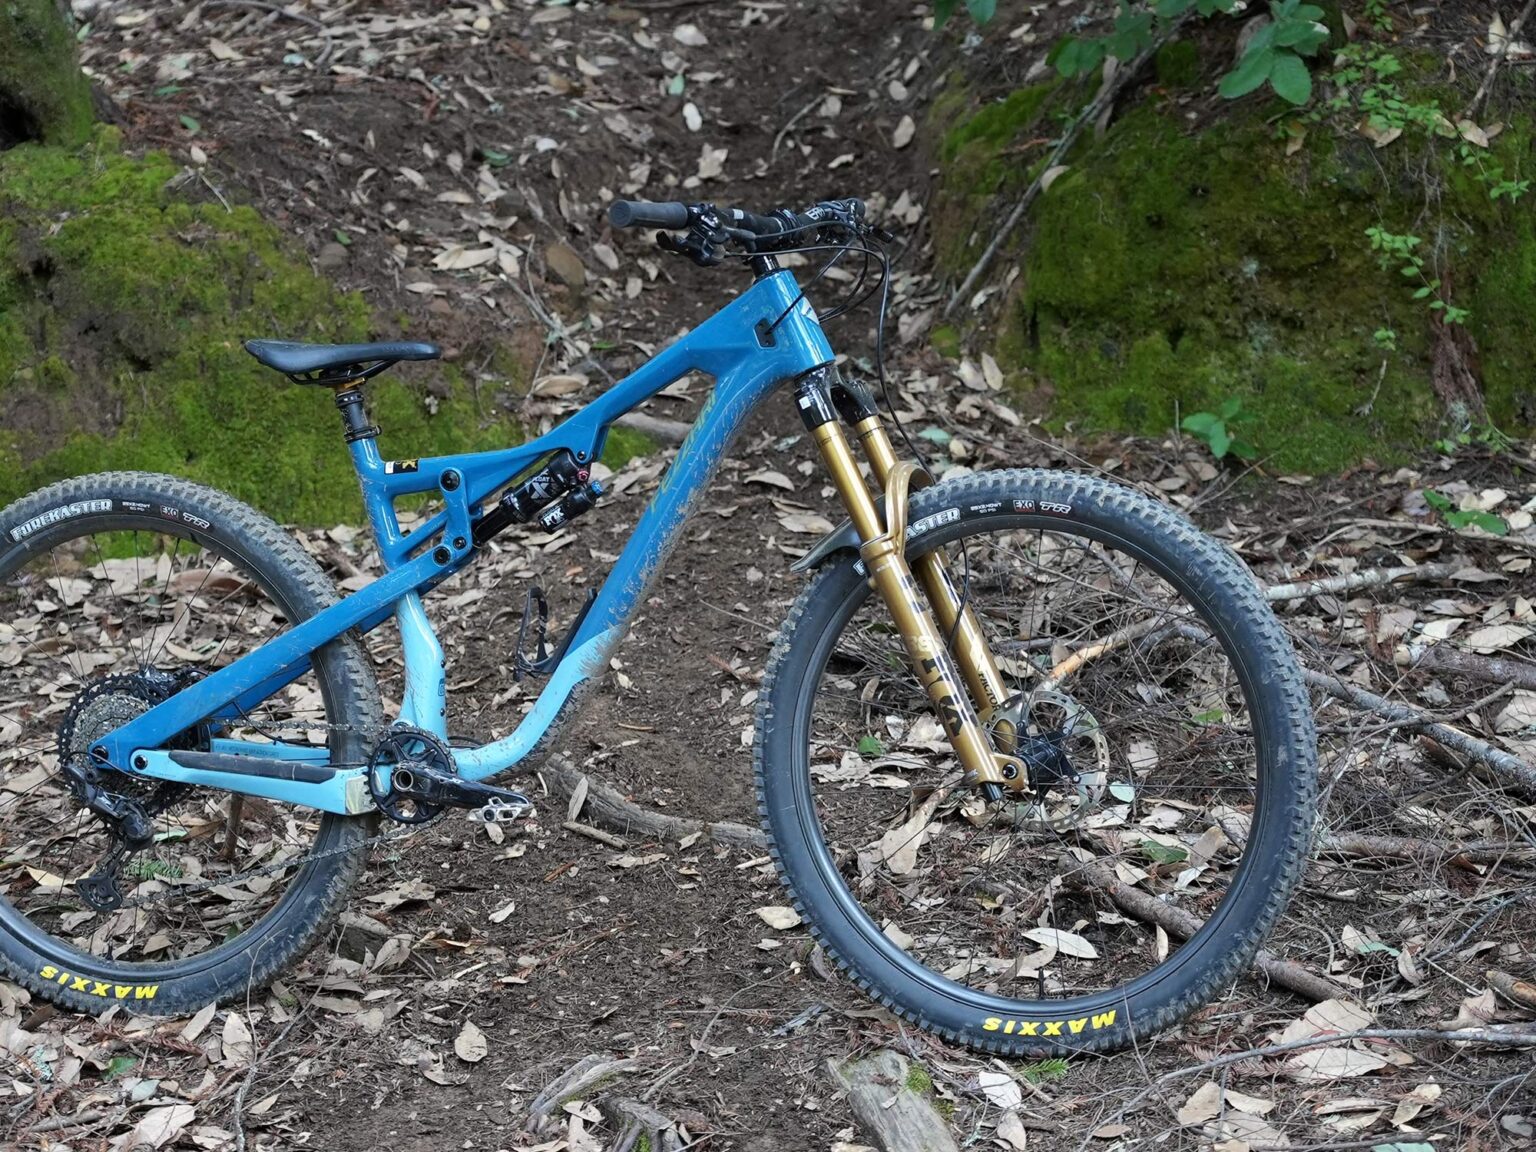 Horquilla fox 36 2025 en edición limitada dorada mostrada en una bicicleta de montaña azul